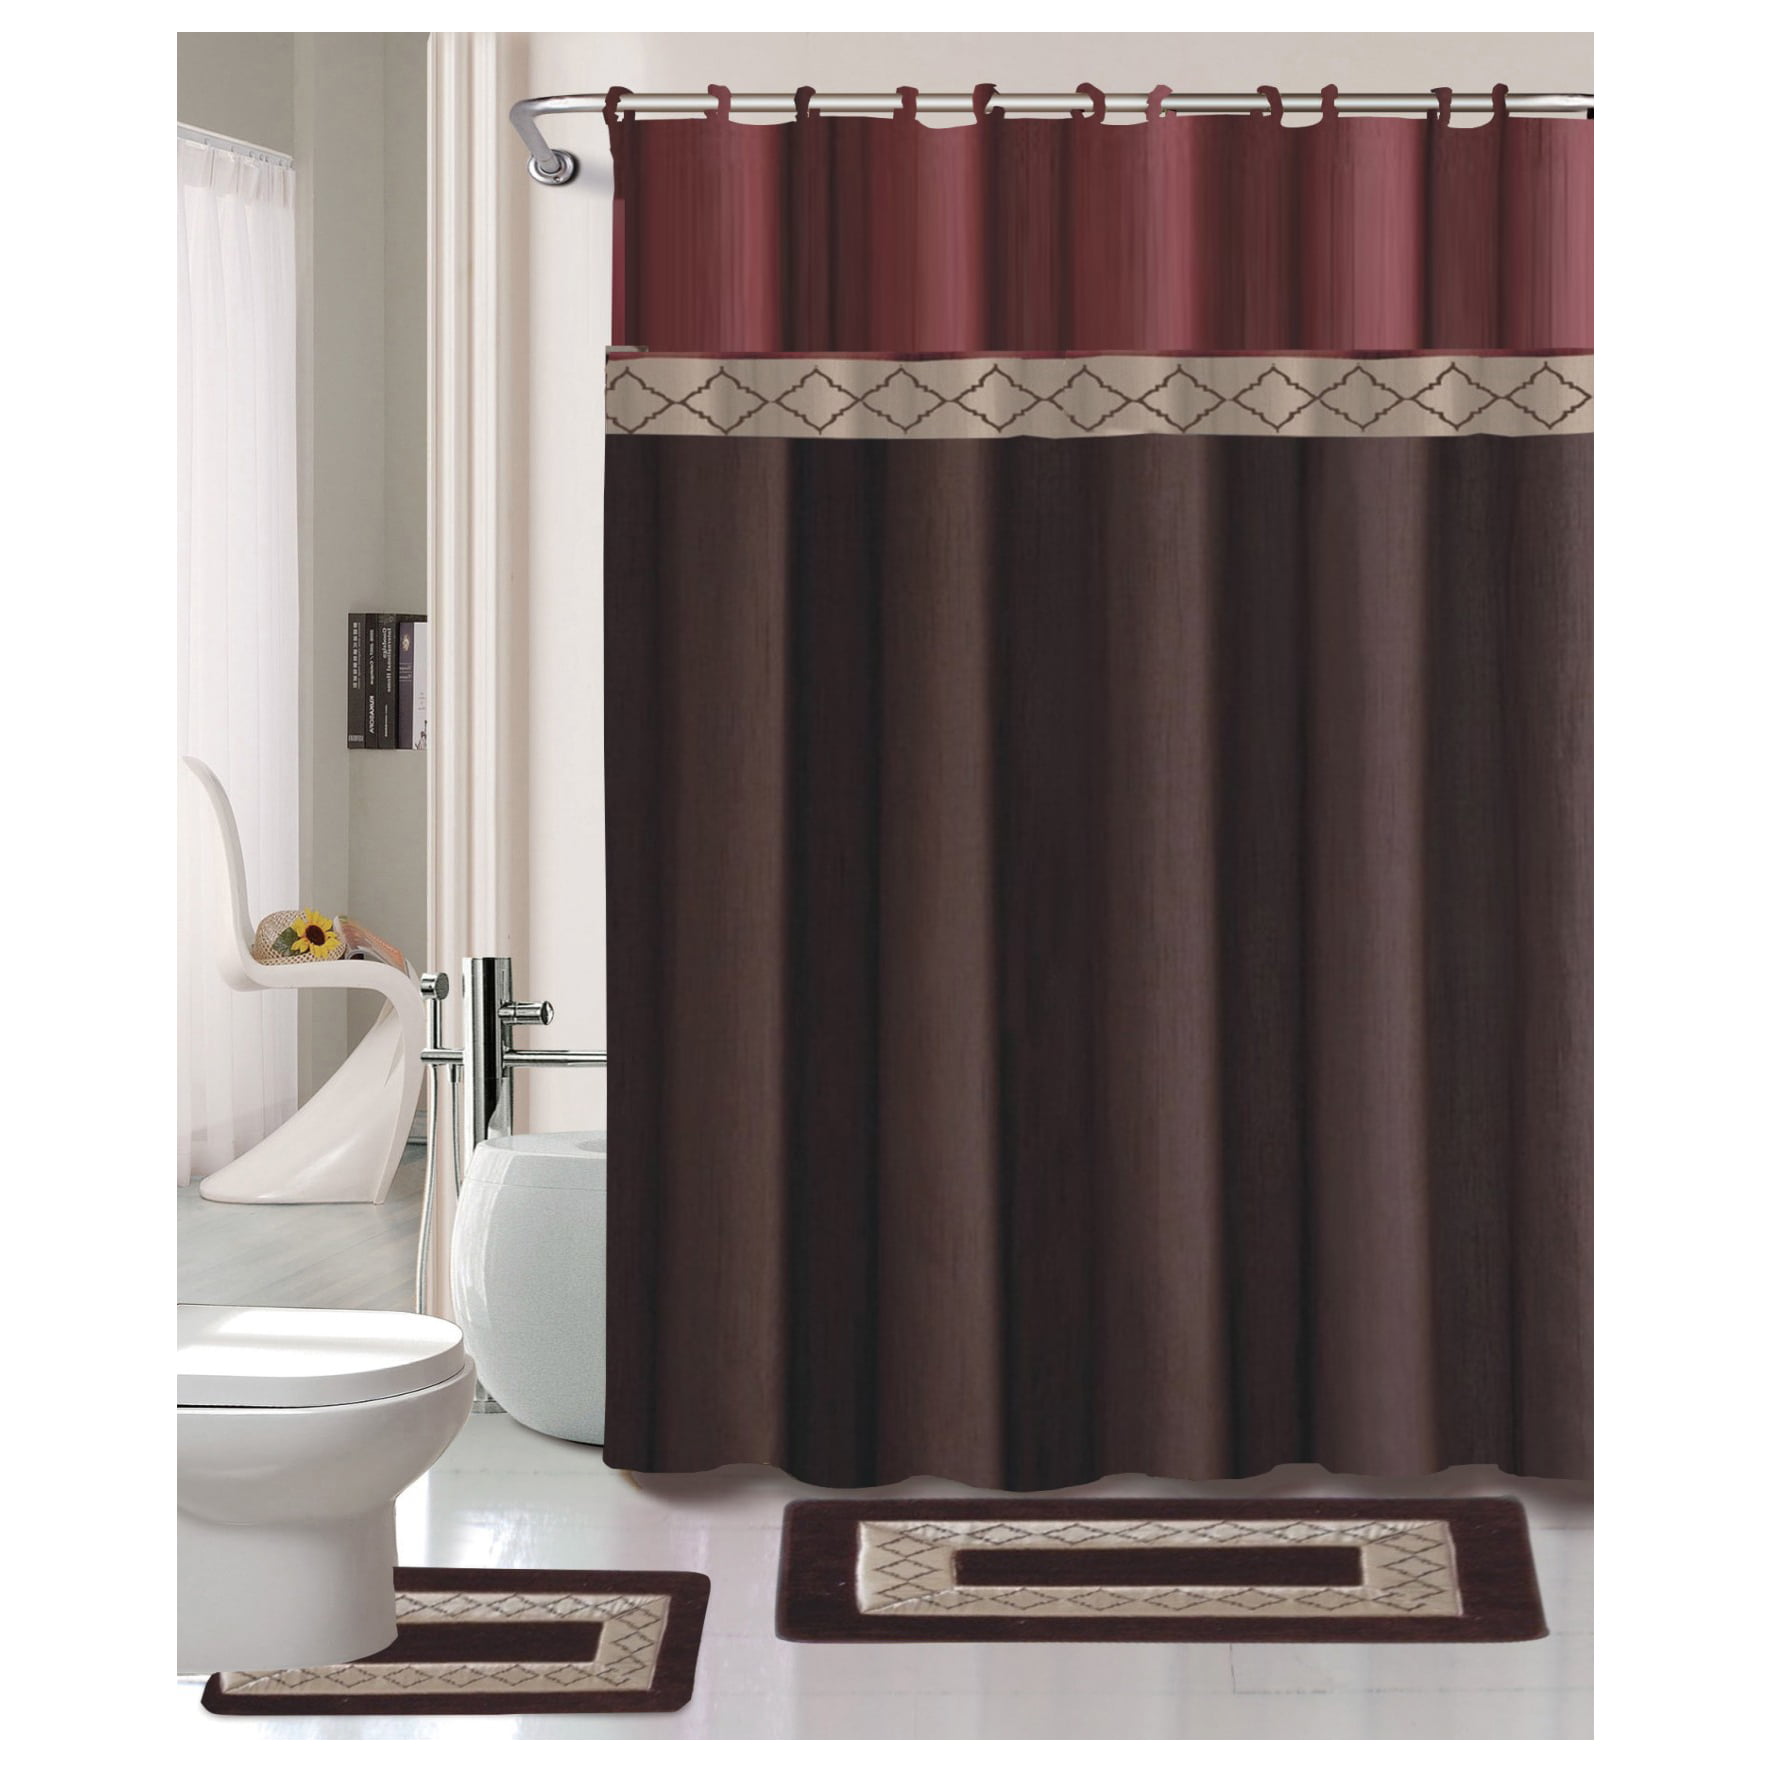 2 Non Slip Bath Mats Rugs Fabric Shower, Brown Bathroom Sets